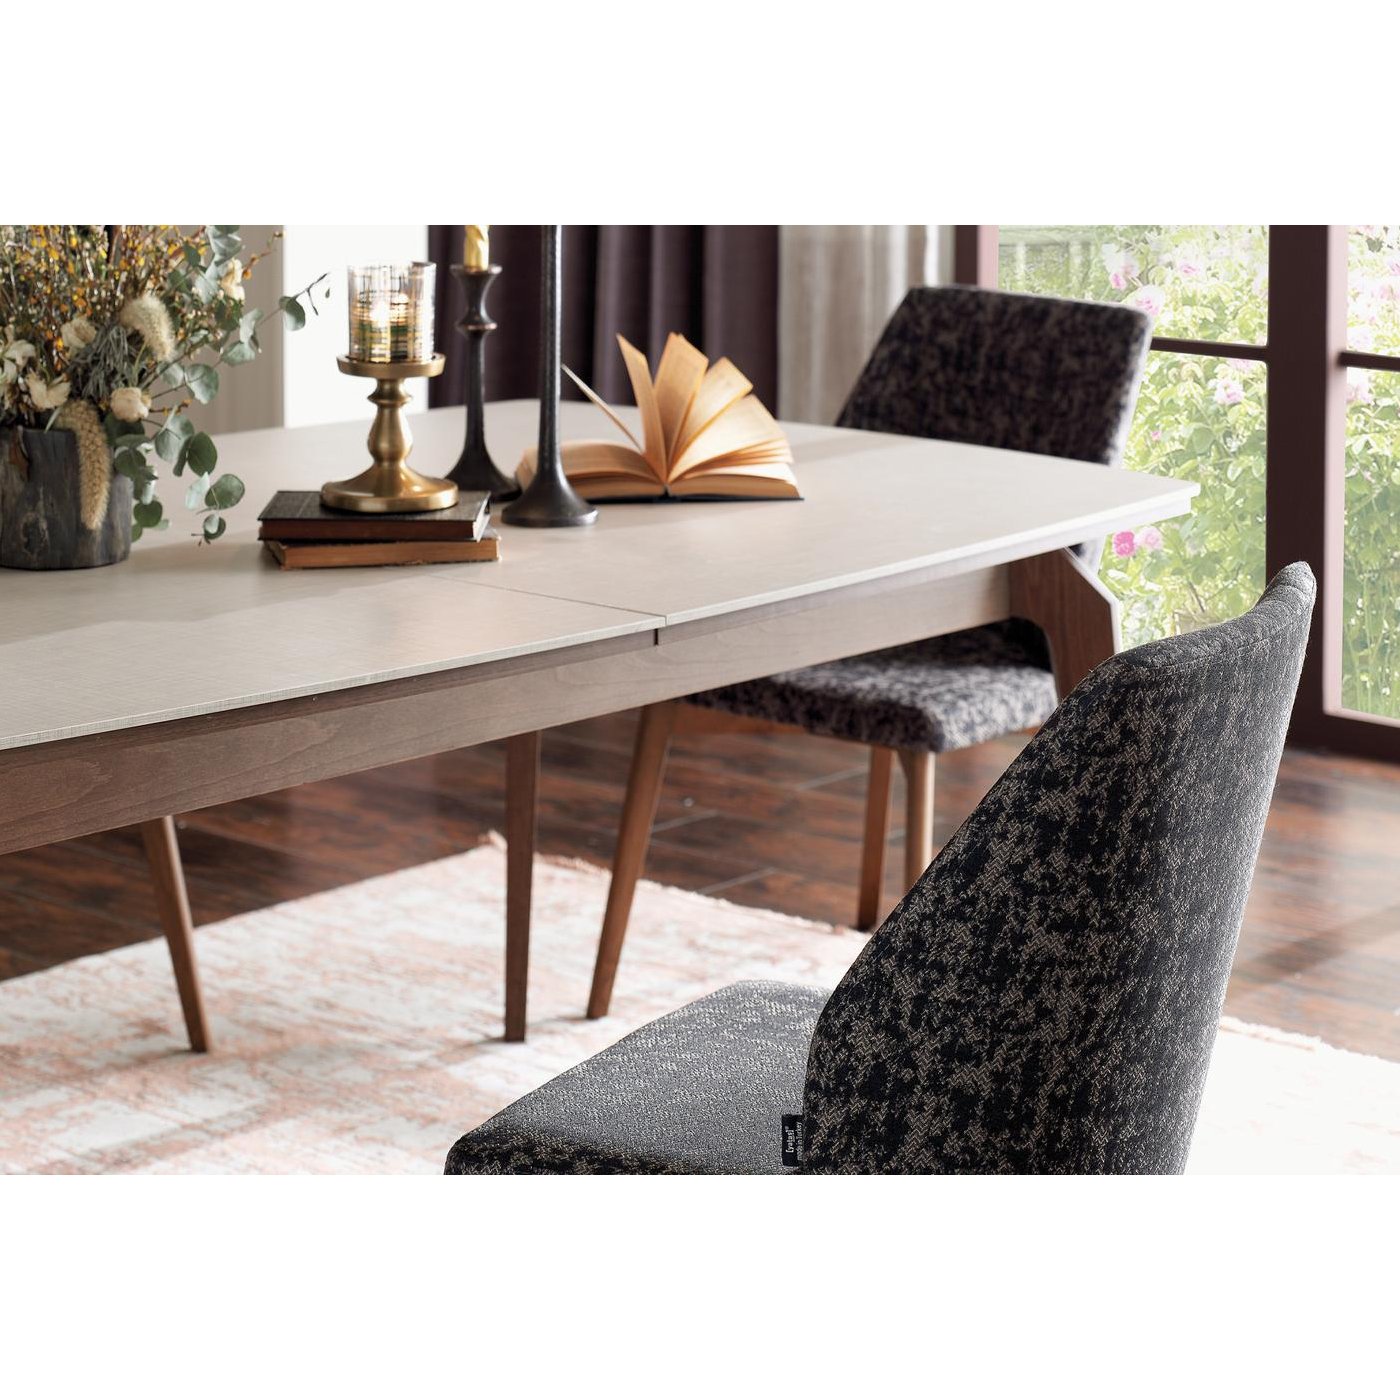 Стол обеденный Enza Home Netha, раздвижной, размер 190(230)х110х76 см55555000001184